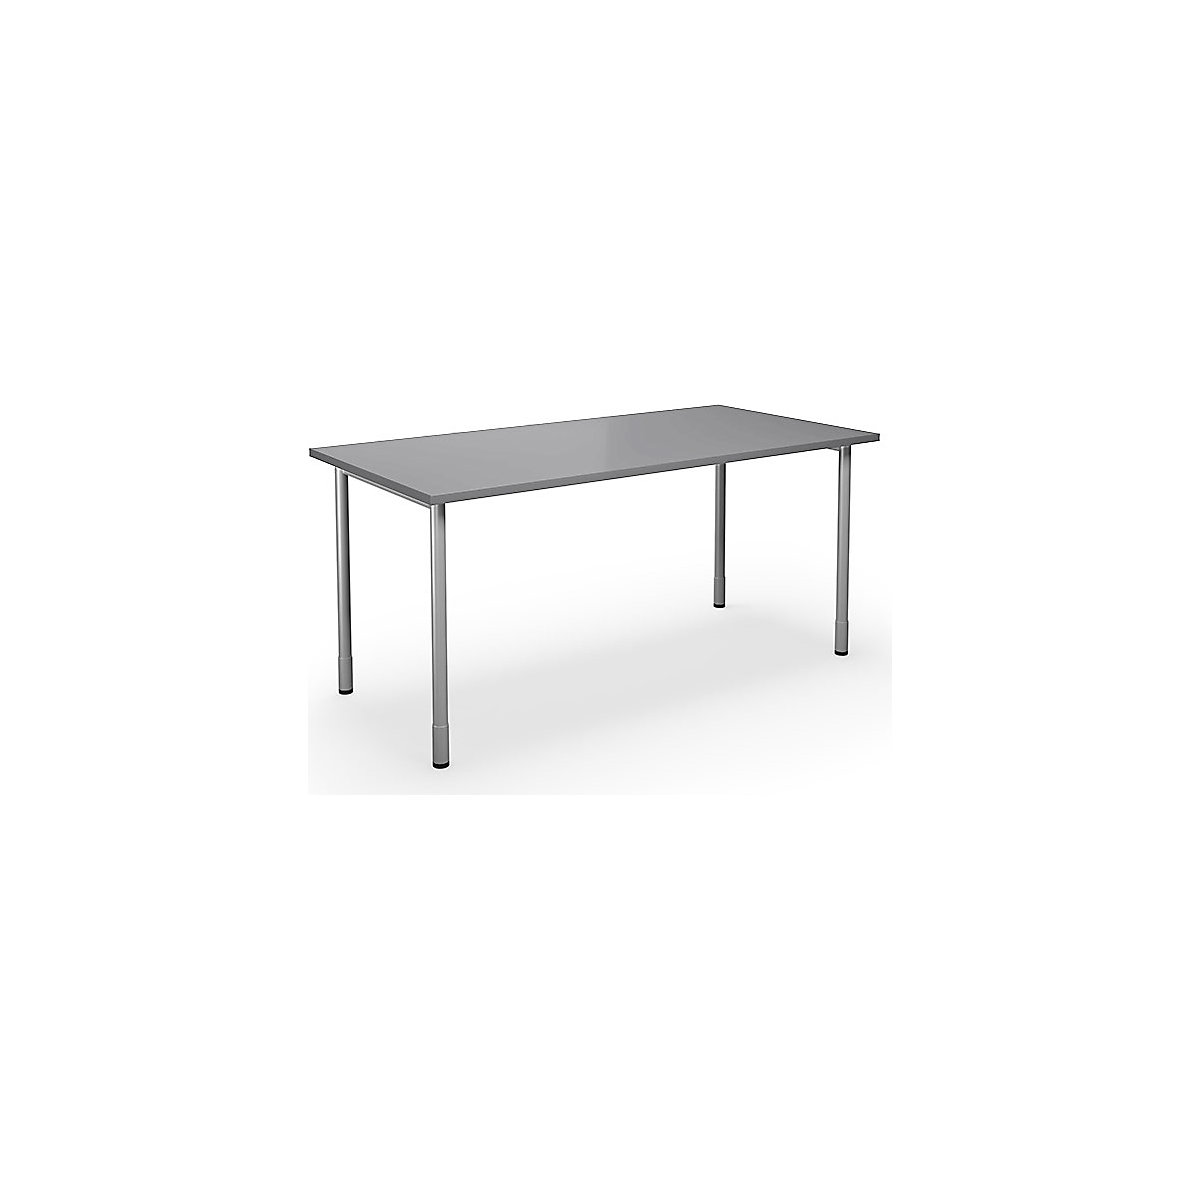 DUO-C multi-purpose desk, straight tabletop, WxD 1600 x 800 mm, light grey, silver-16